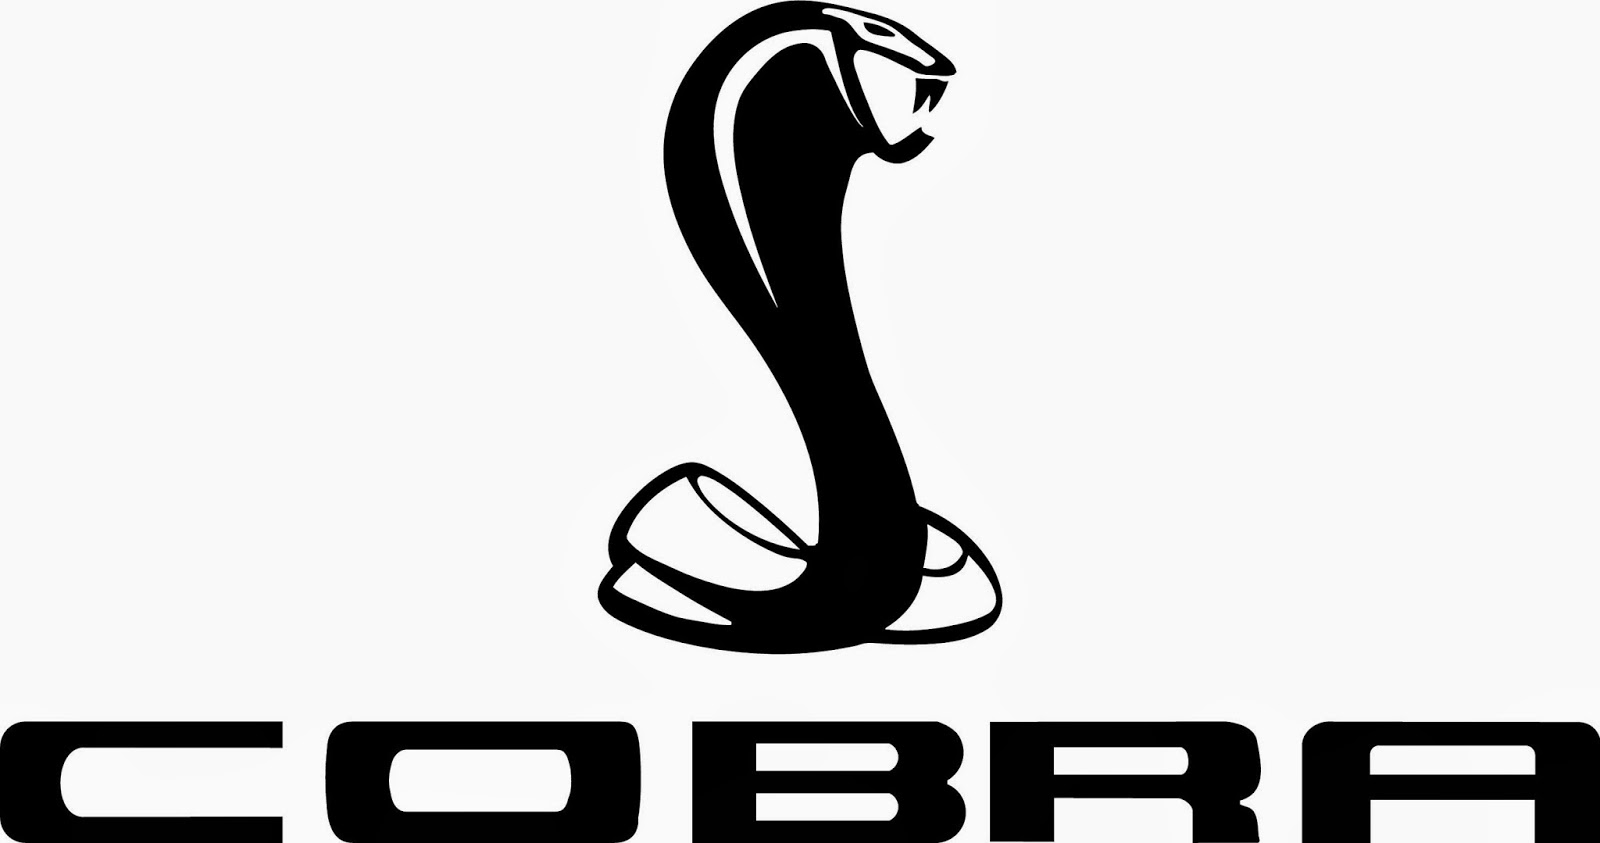 Ford mustang cobra logo #5